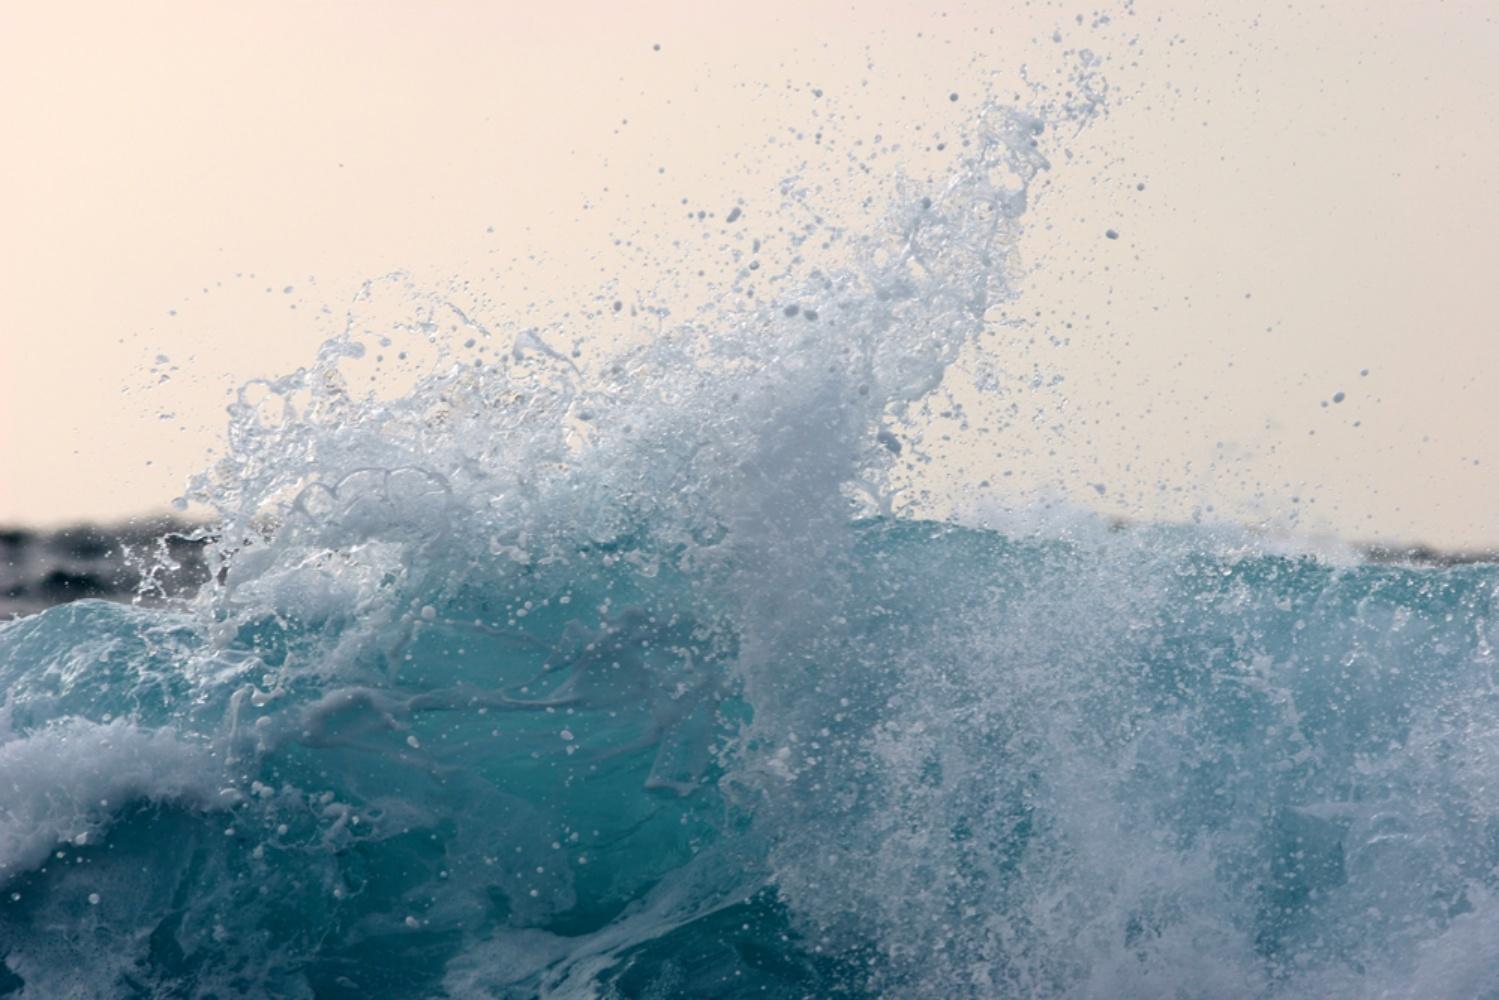 NAMI_061 – Syoin Kajii, Japanese Photography, Ocean, Waves, Water, Nature, Art